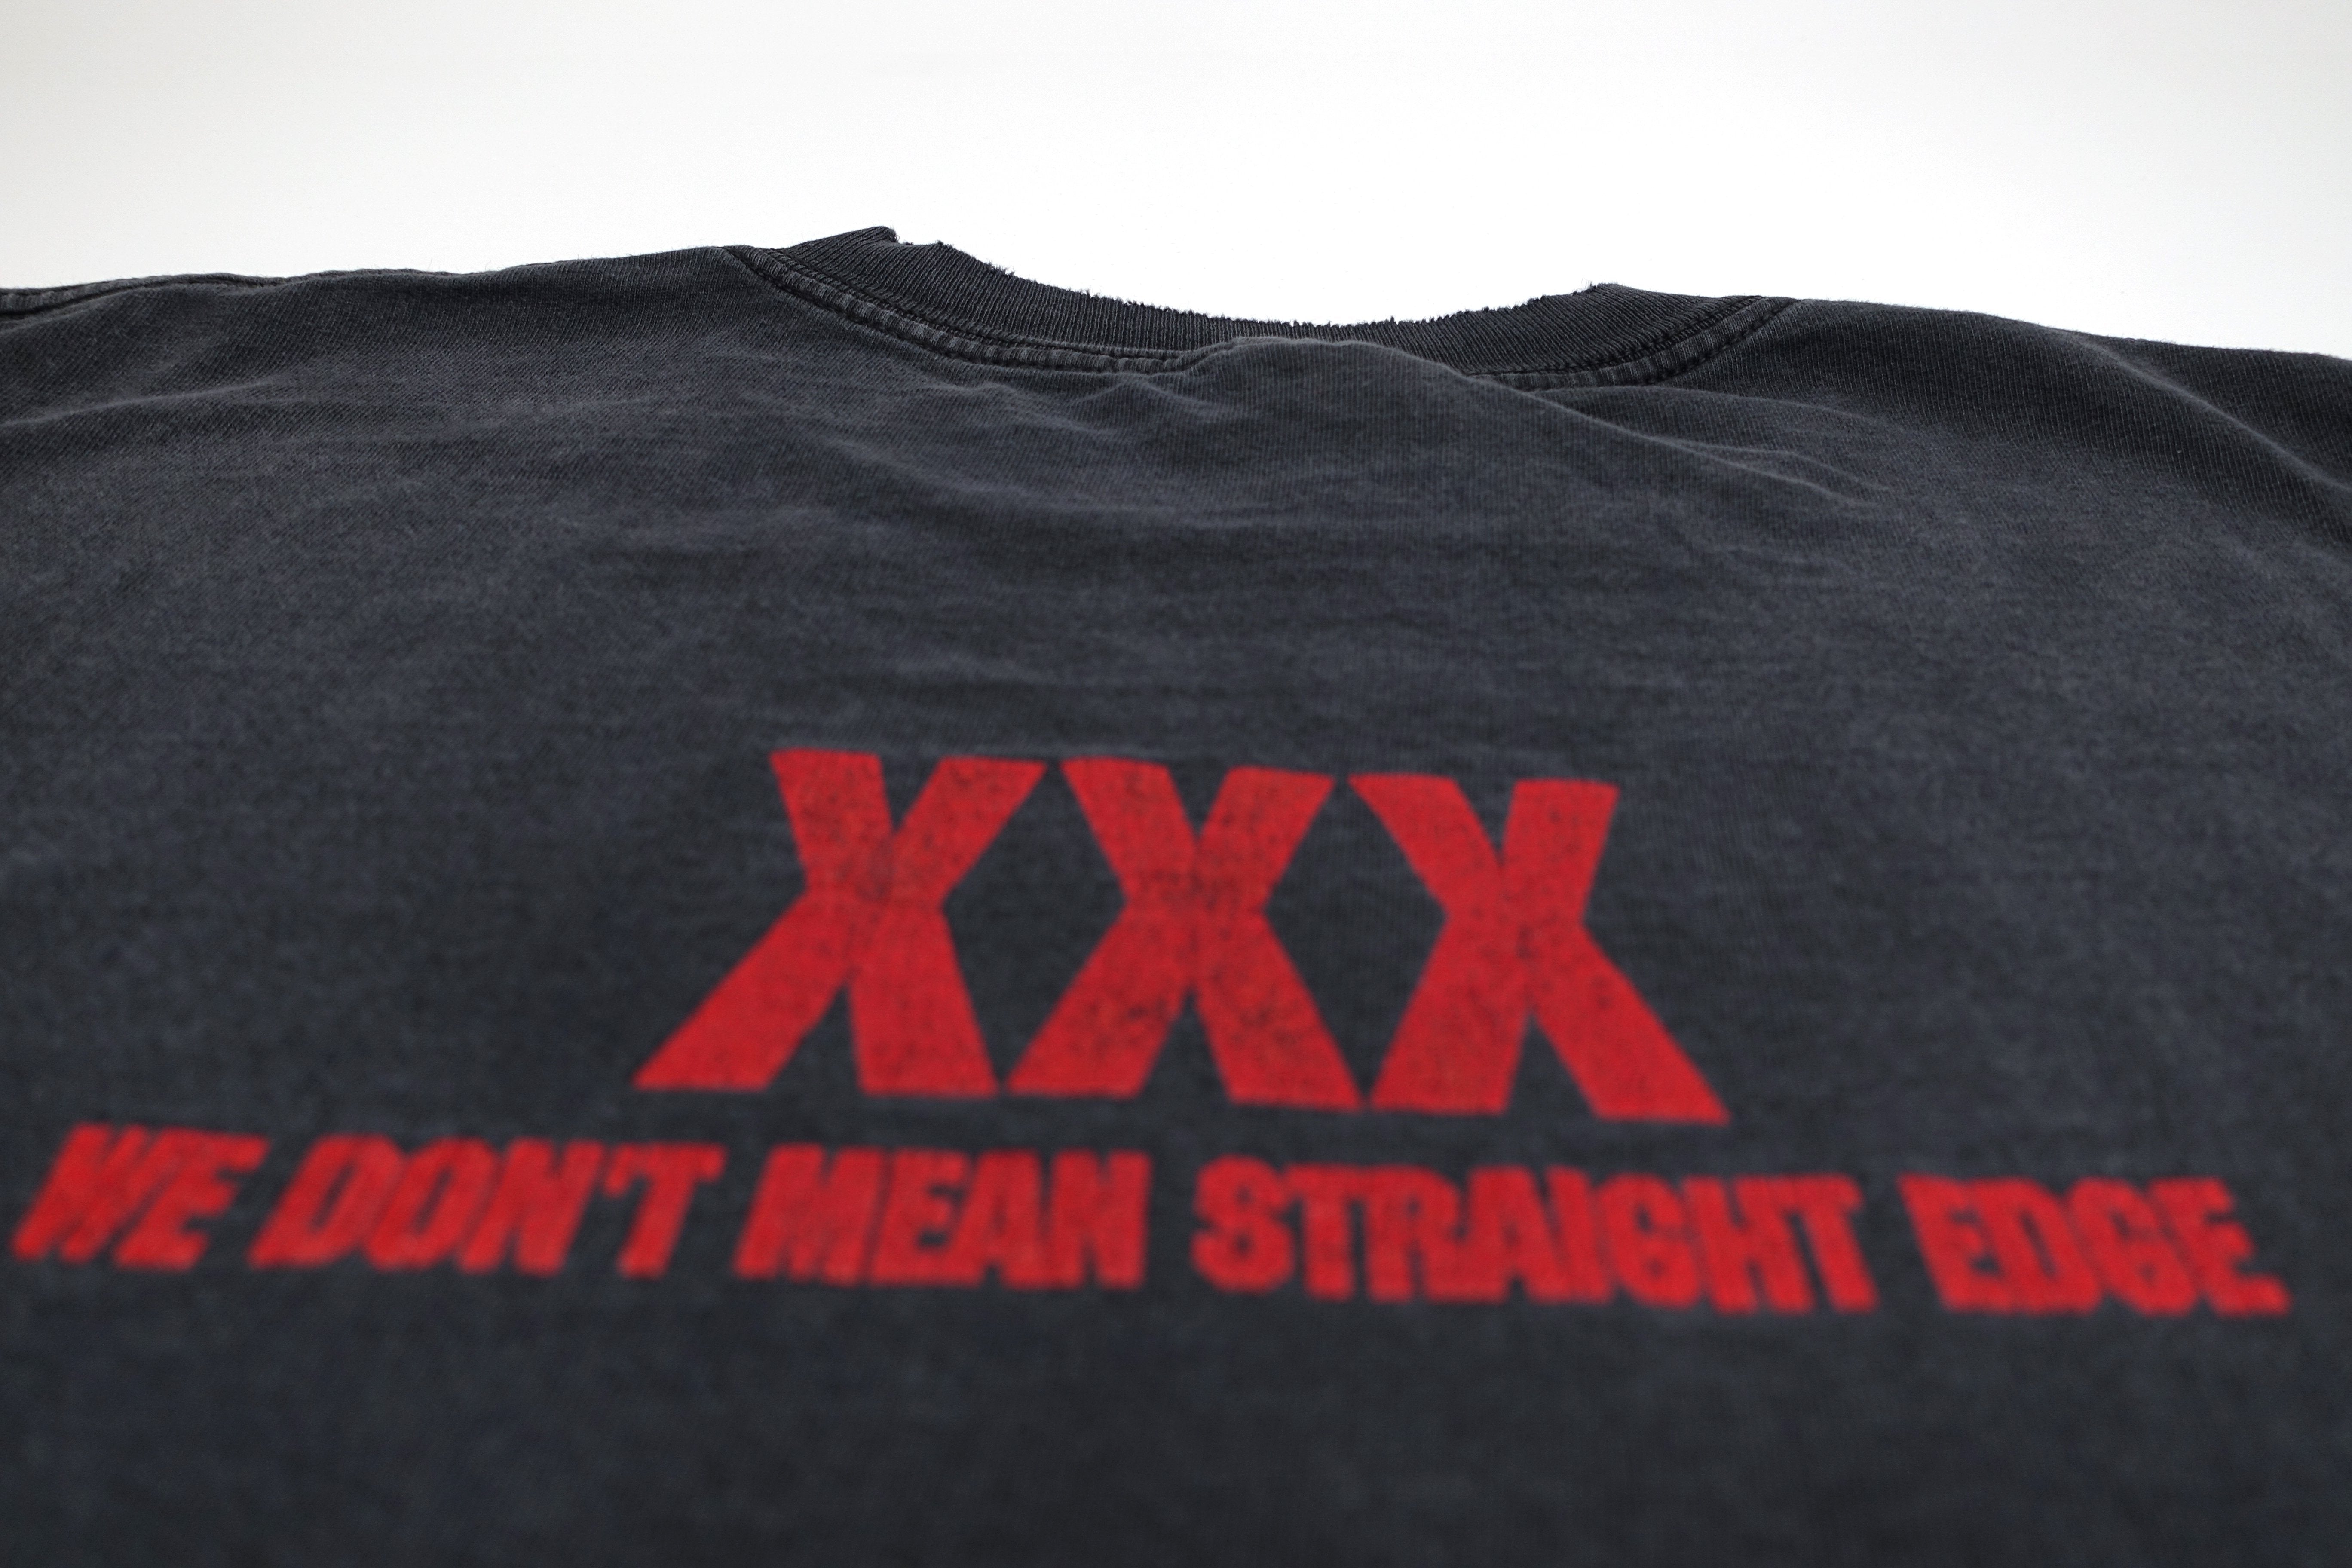 Nobodys - Generation XXX / We Dont Mean Straight Edge 1998 Tour Shirt Size XL